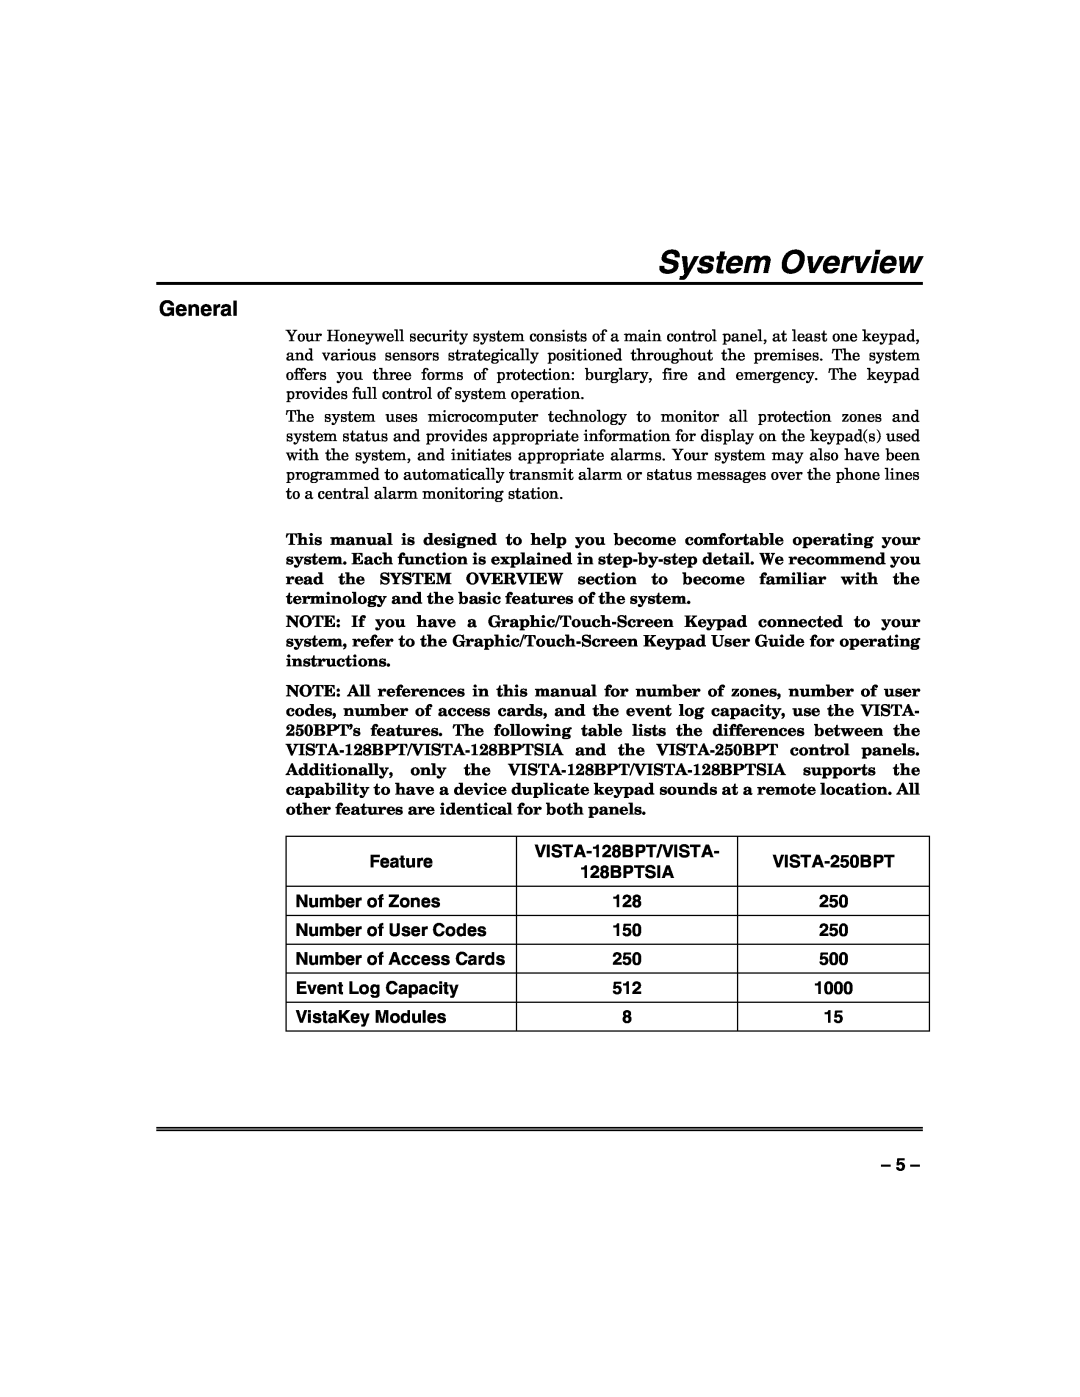 Honeywell 128BPTSIA, VISTA250BPT, VISTA128BPT manual System Overview, General 